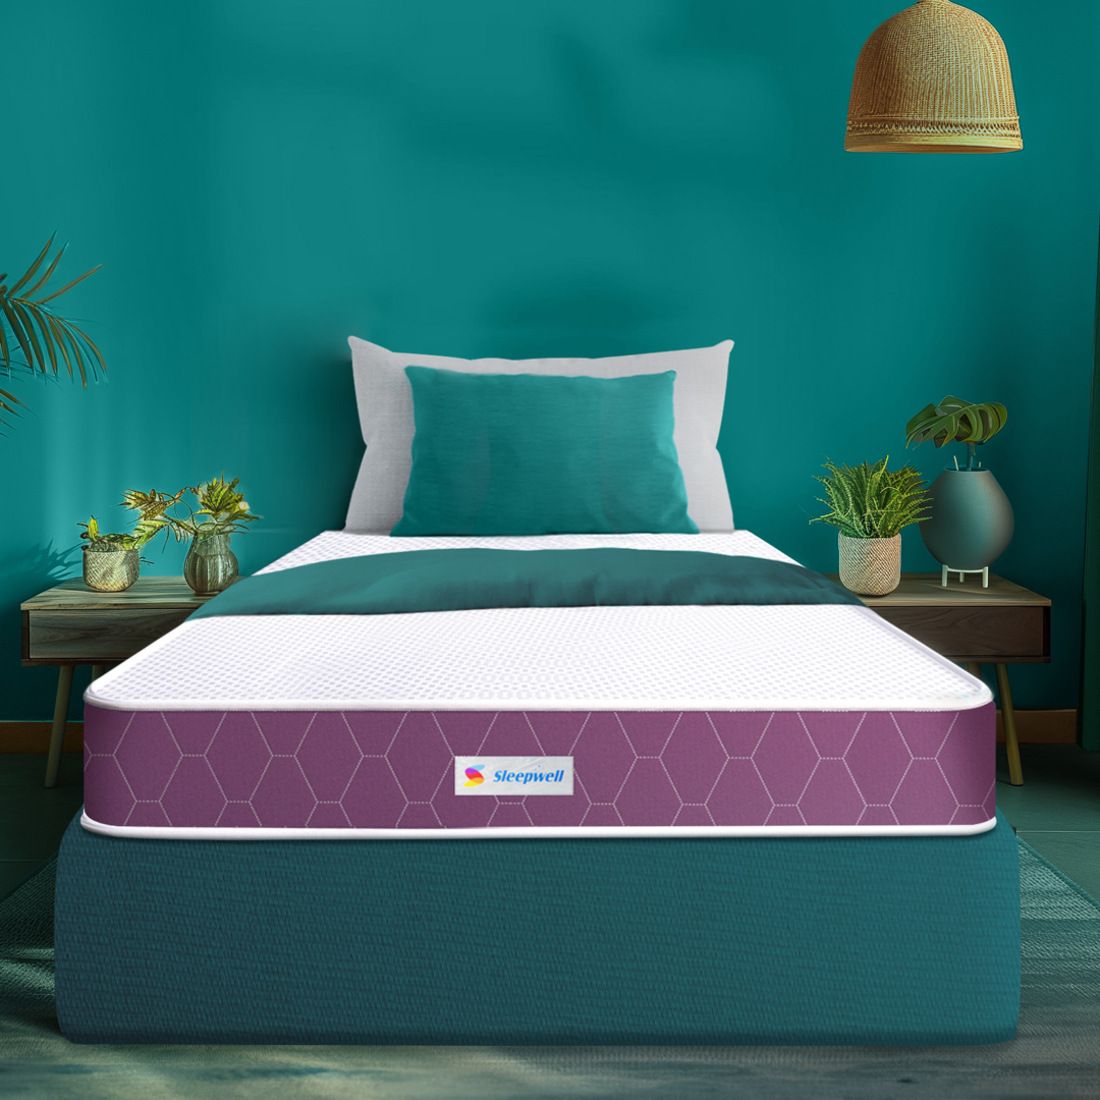 Sleepwell Ortho Mattress | Quilted | 5-inch Single Bed Size, Impressions Memory Foam, Medium Firm Mattress(Purple, 75x30x5 )